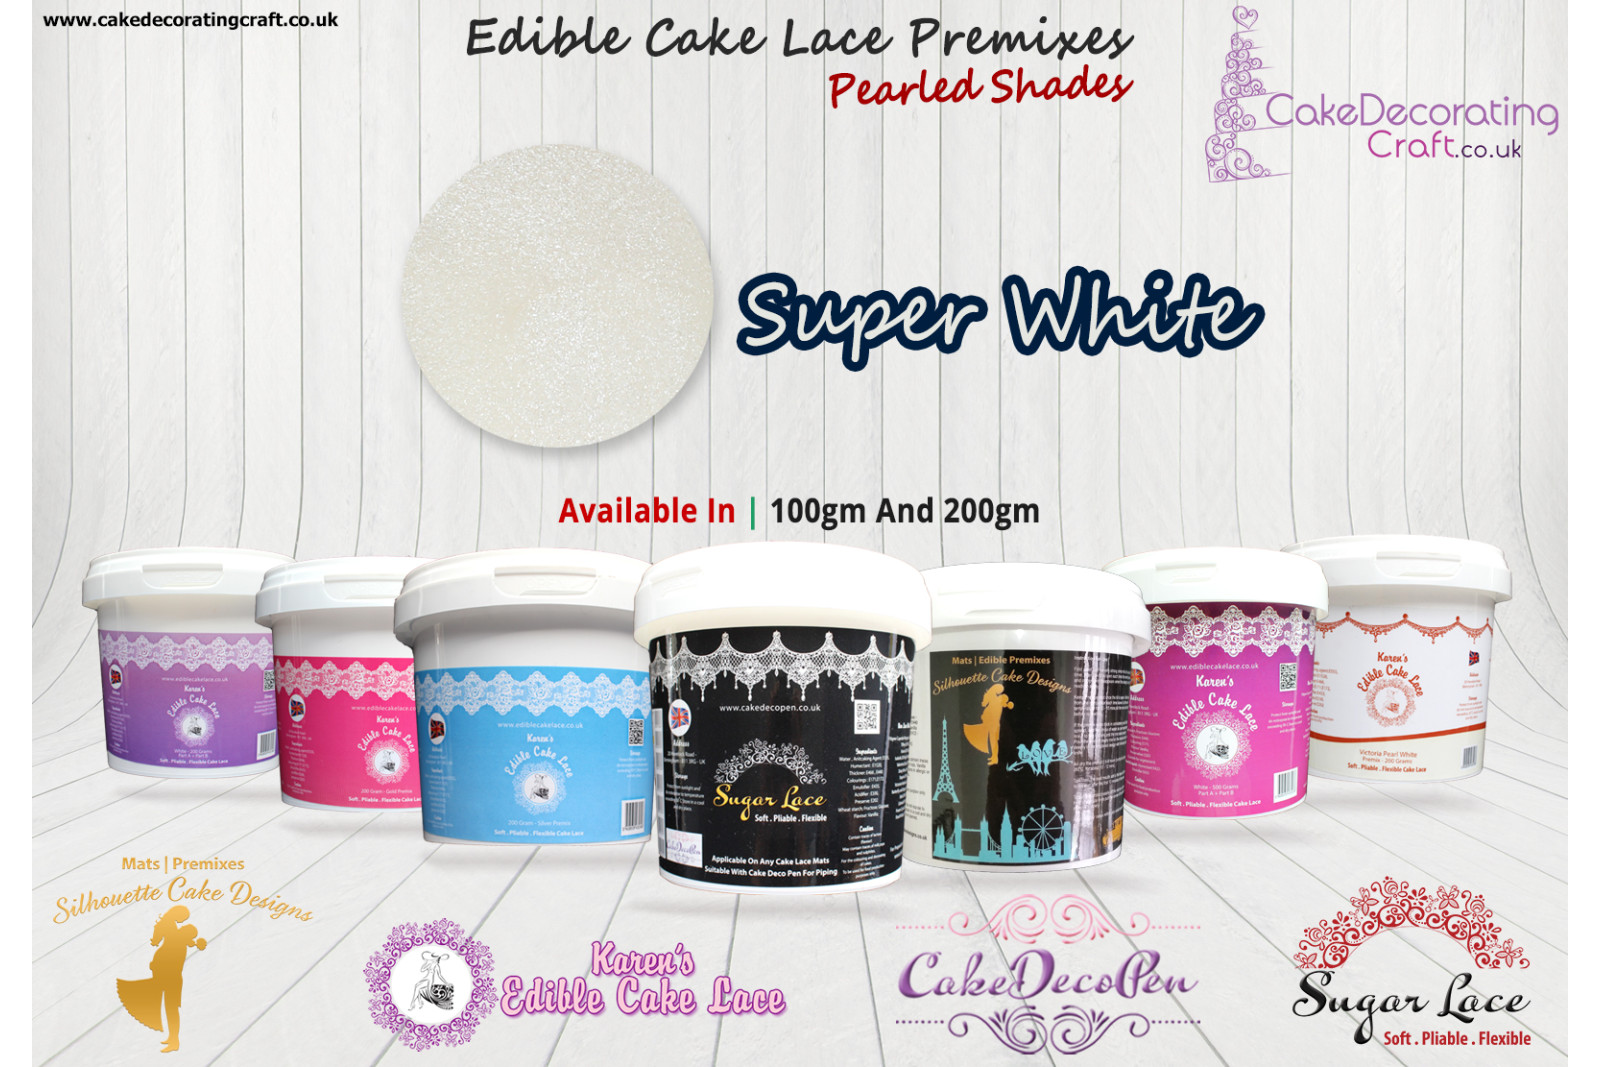 Super White | Edible Cake Lace Premixes | Pearled Shade | 200 Grams